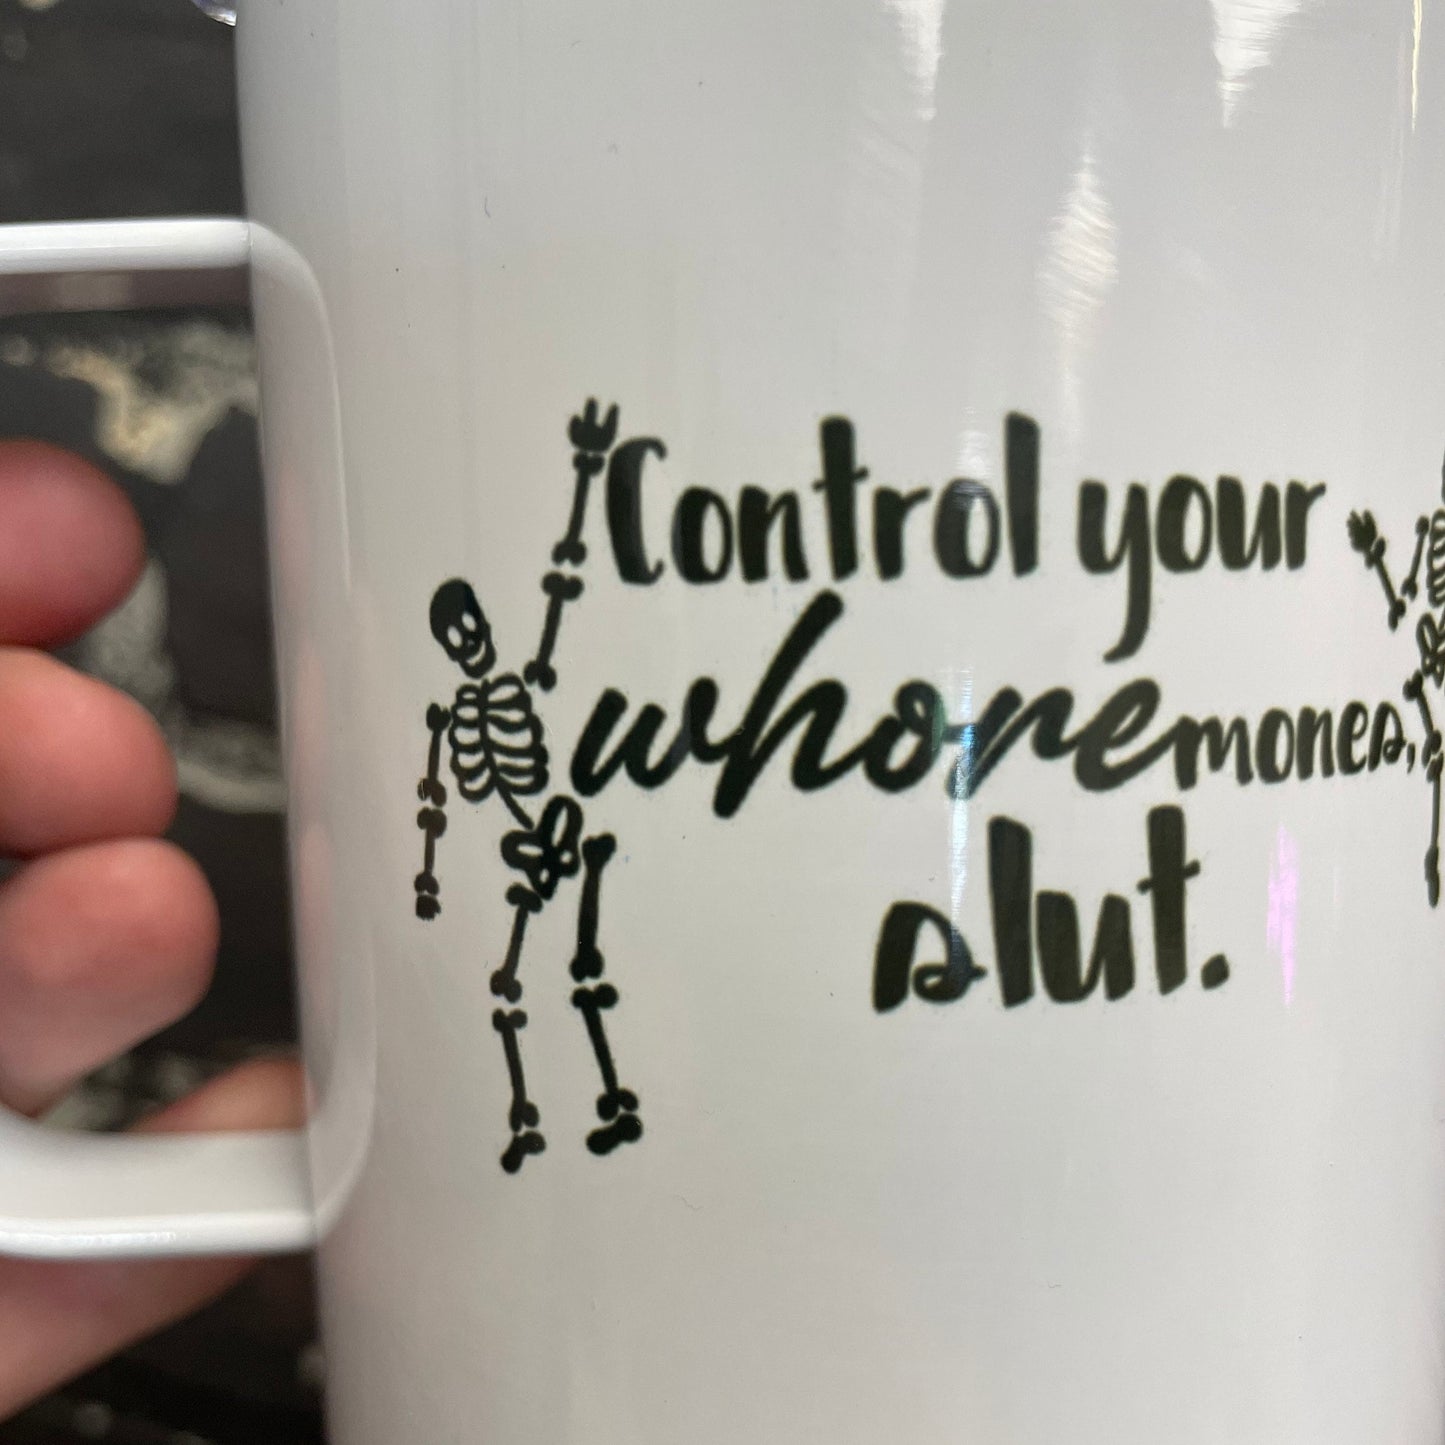 Control your whoremones slut, 10oz Camp Style Insulated Mug with Handle & Leak Proof Lid